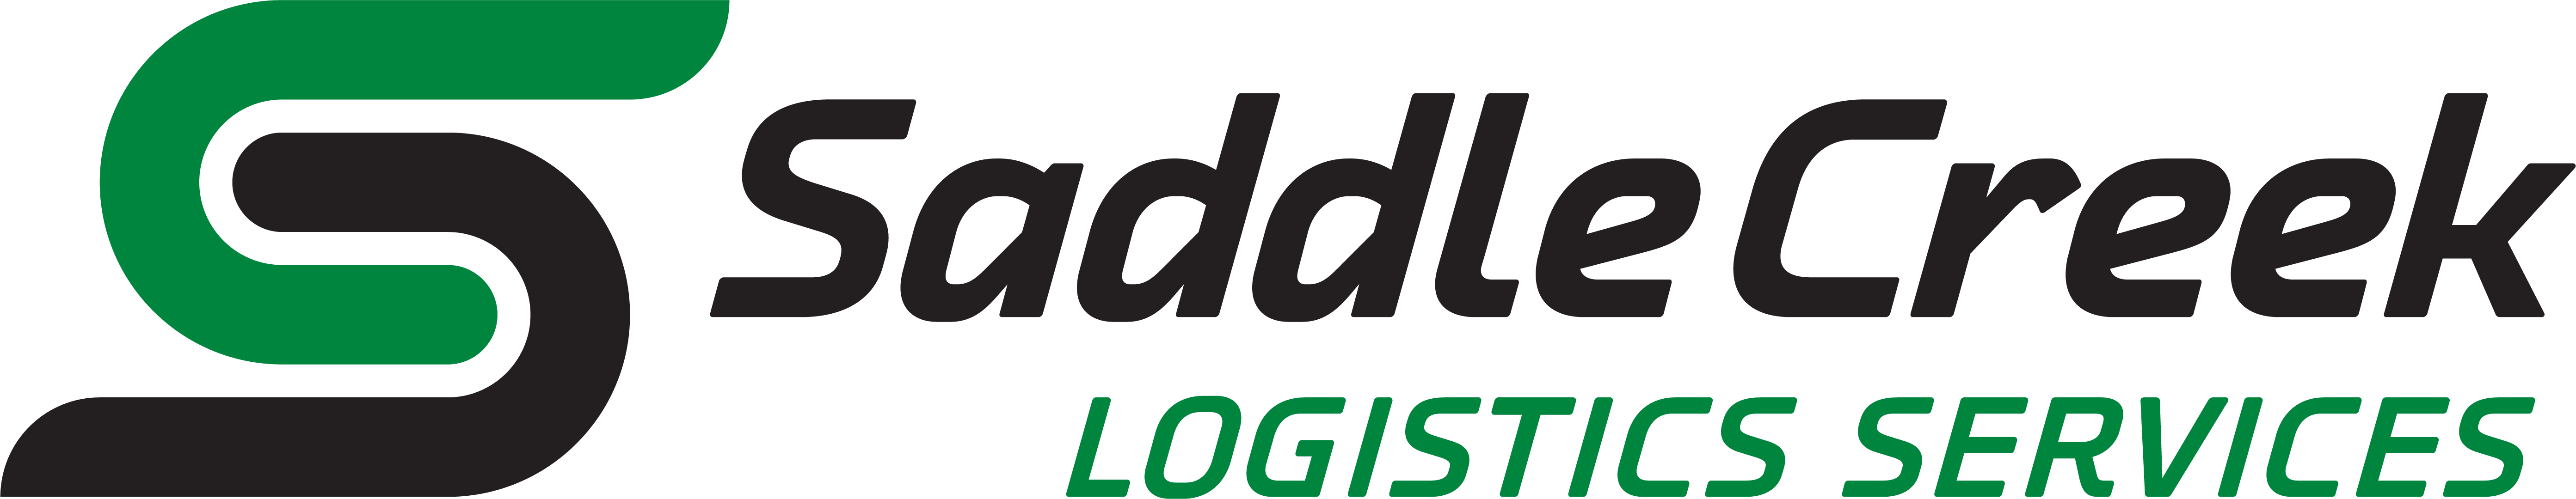 Saddle Creek Logistics Services Logo